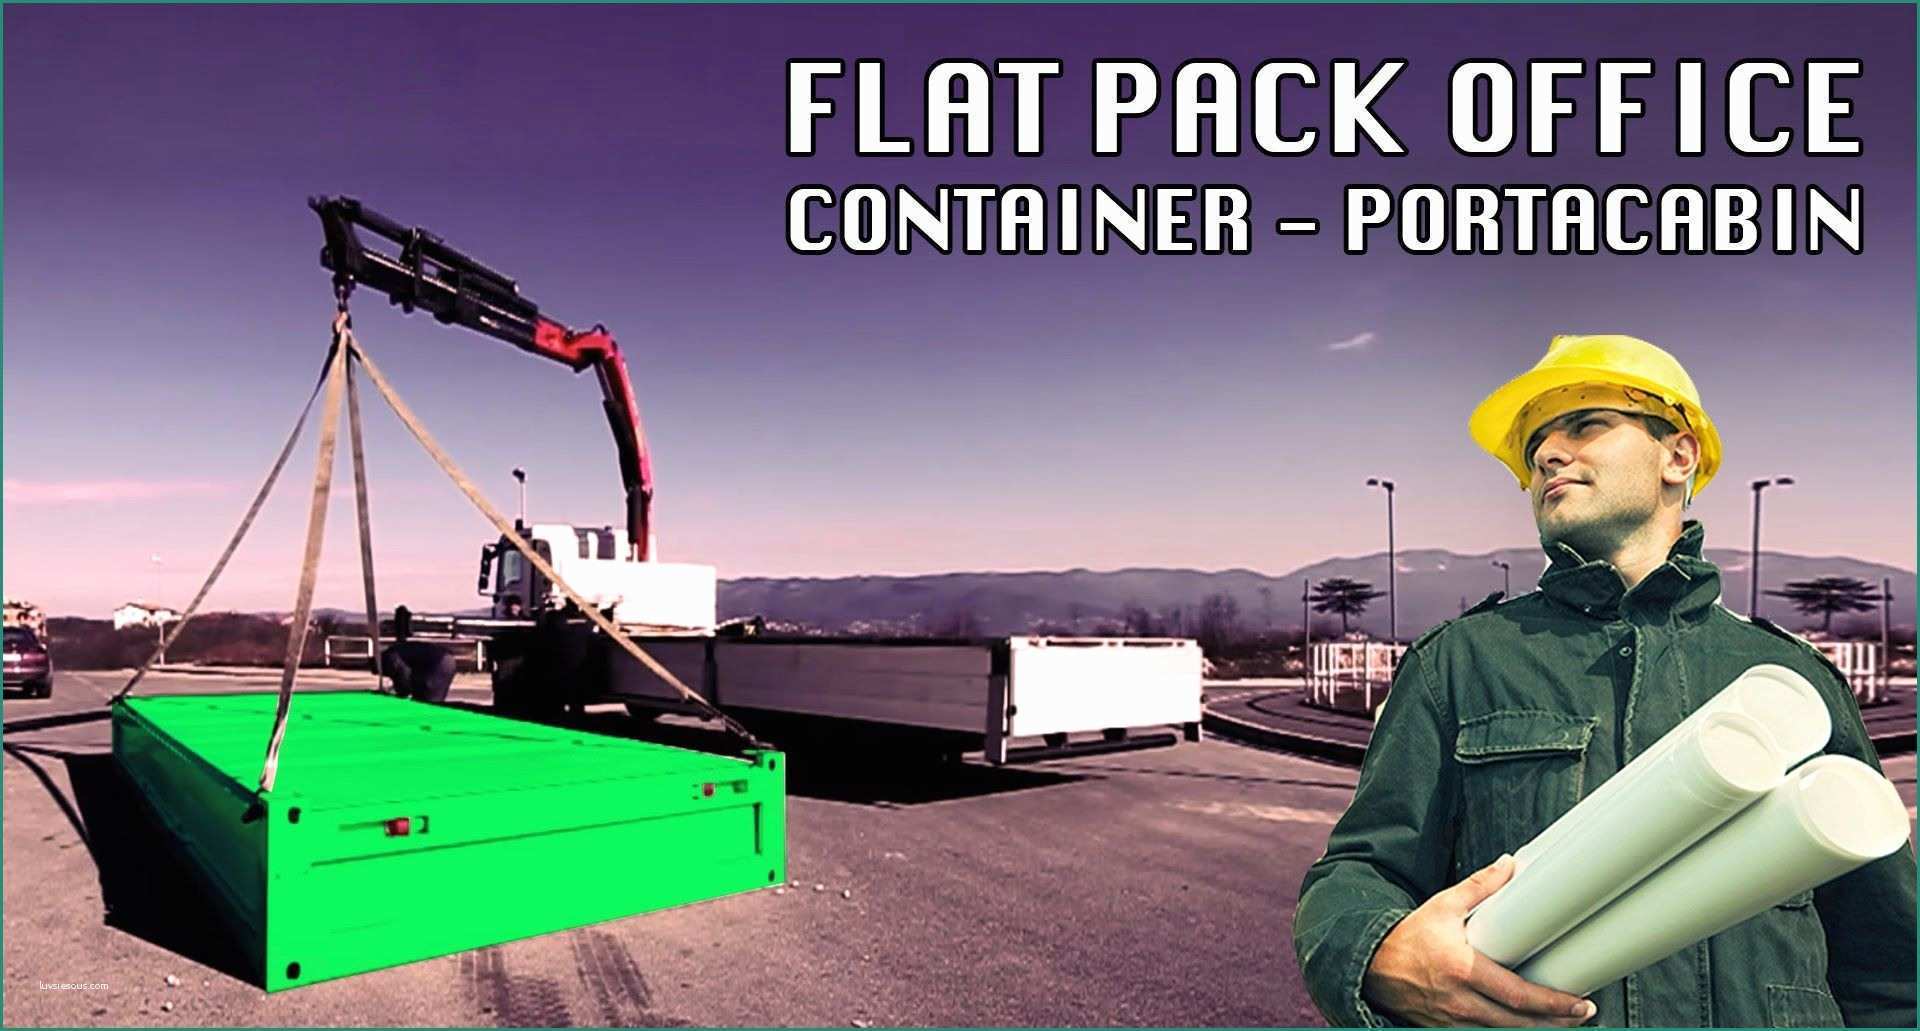 Decathlon Gazebo Pieghevole E Flat Pack Office or Storage Container Portacabin Producer